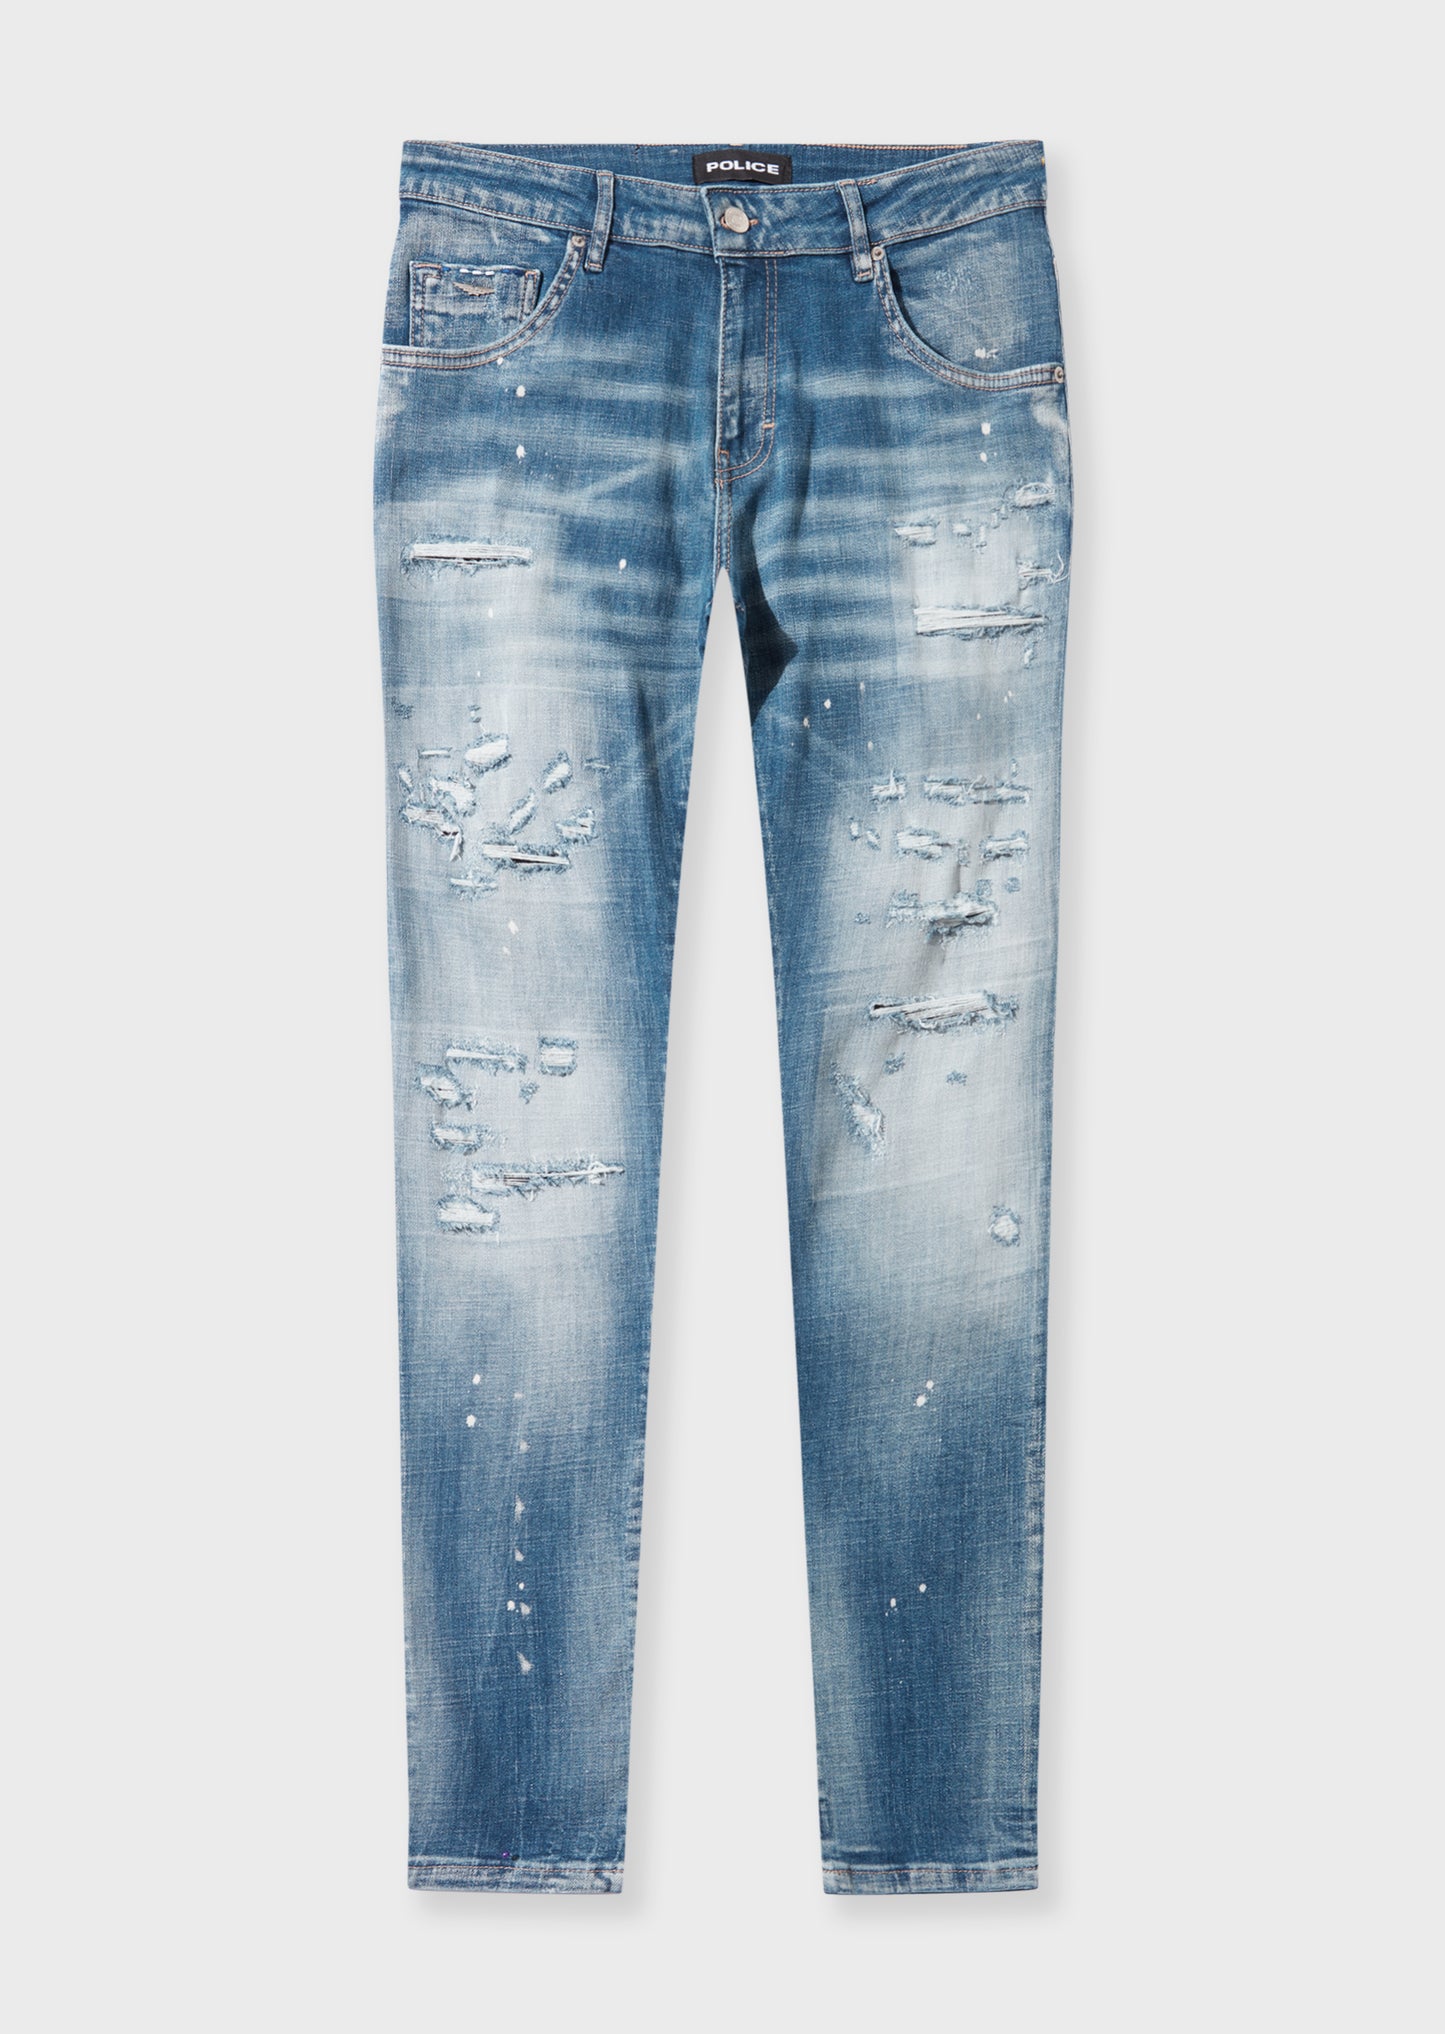 Deniro Lat 978 Slim Fit Jeans